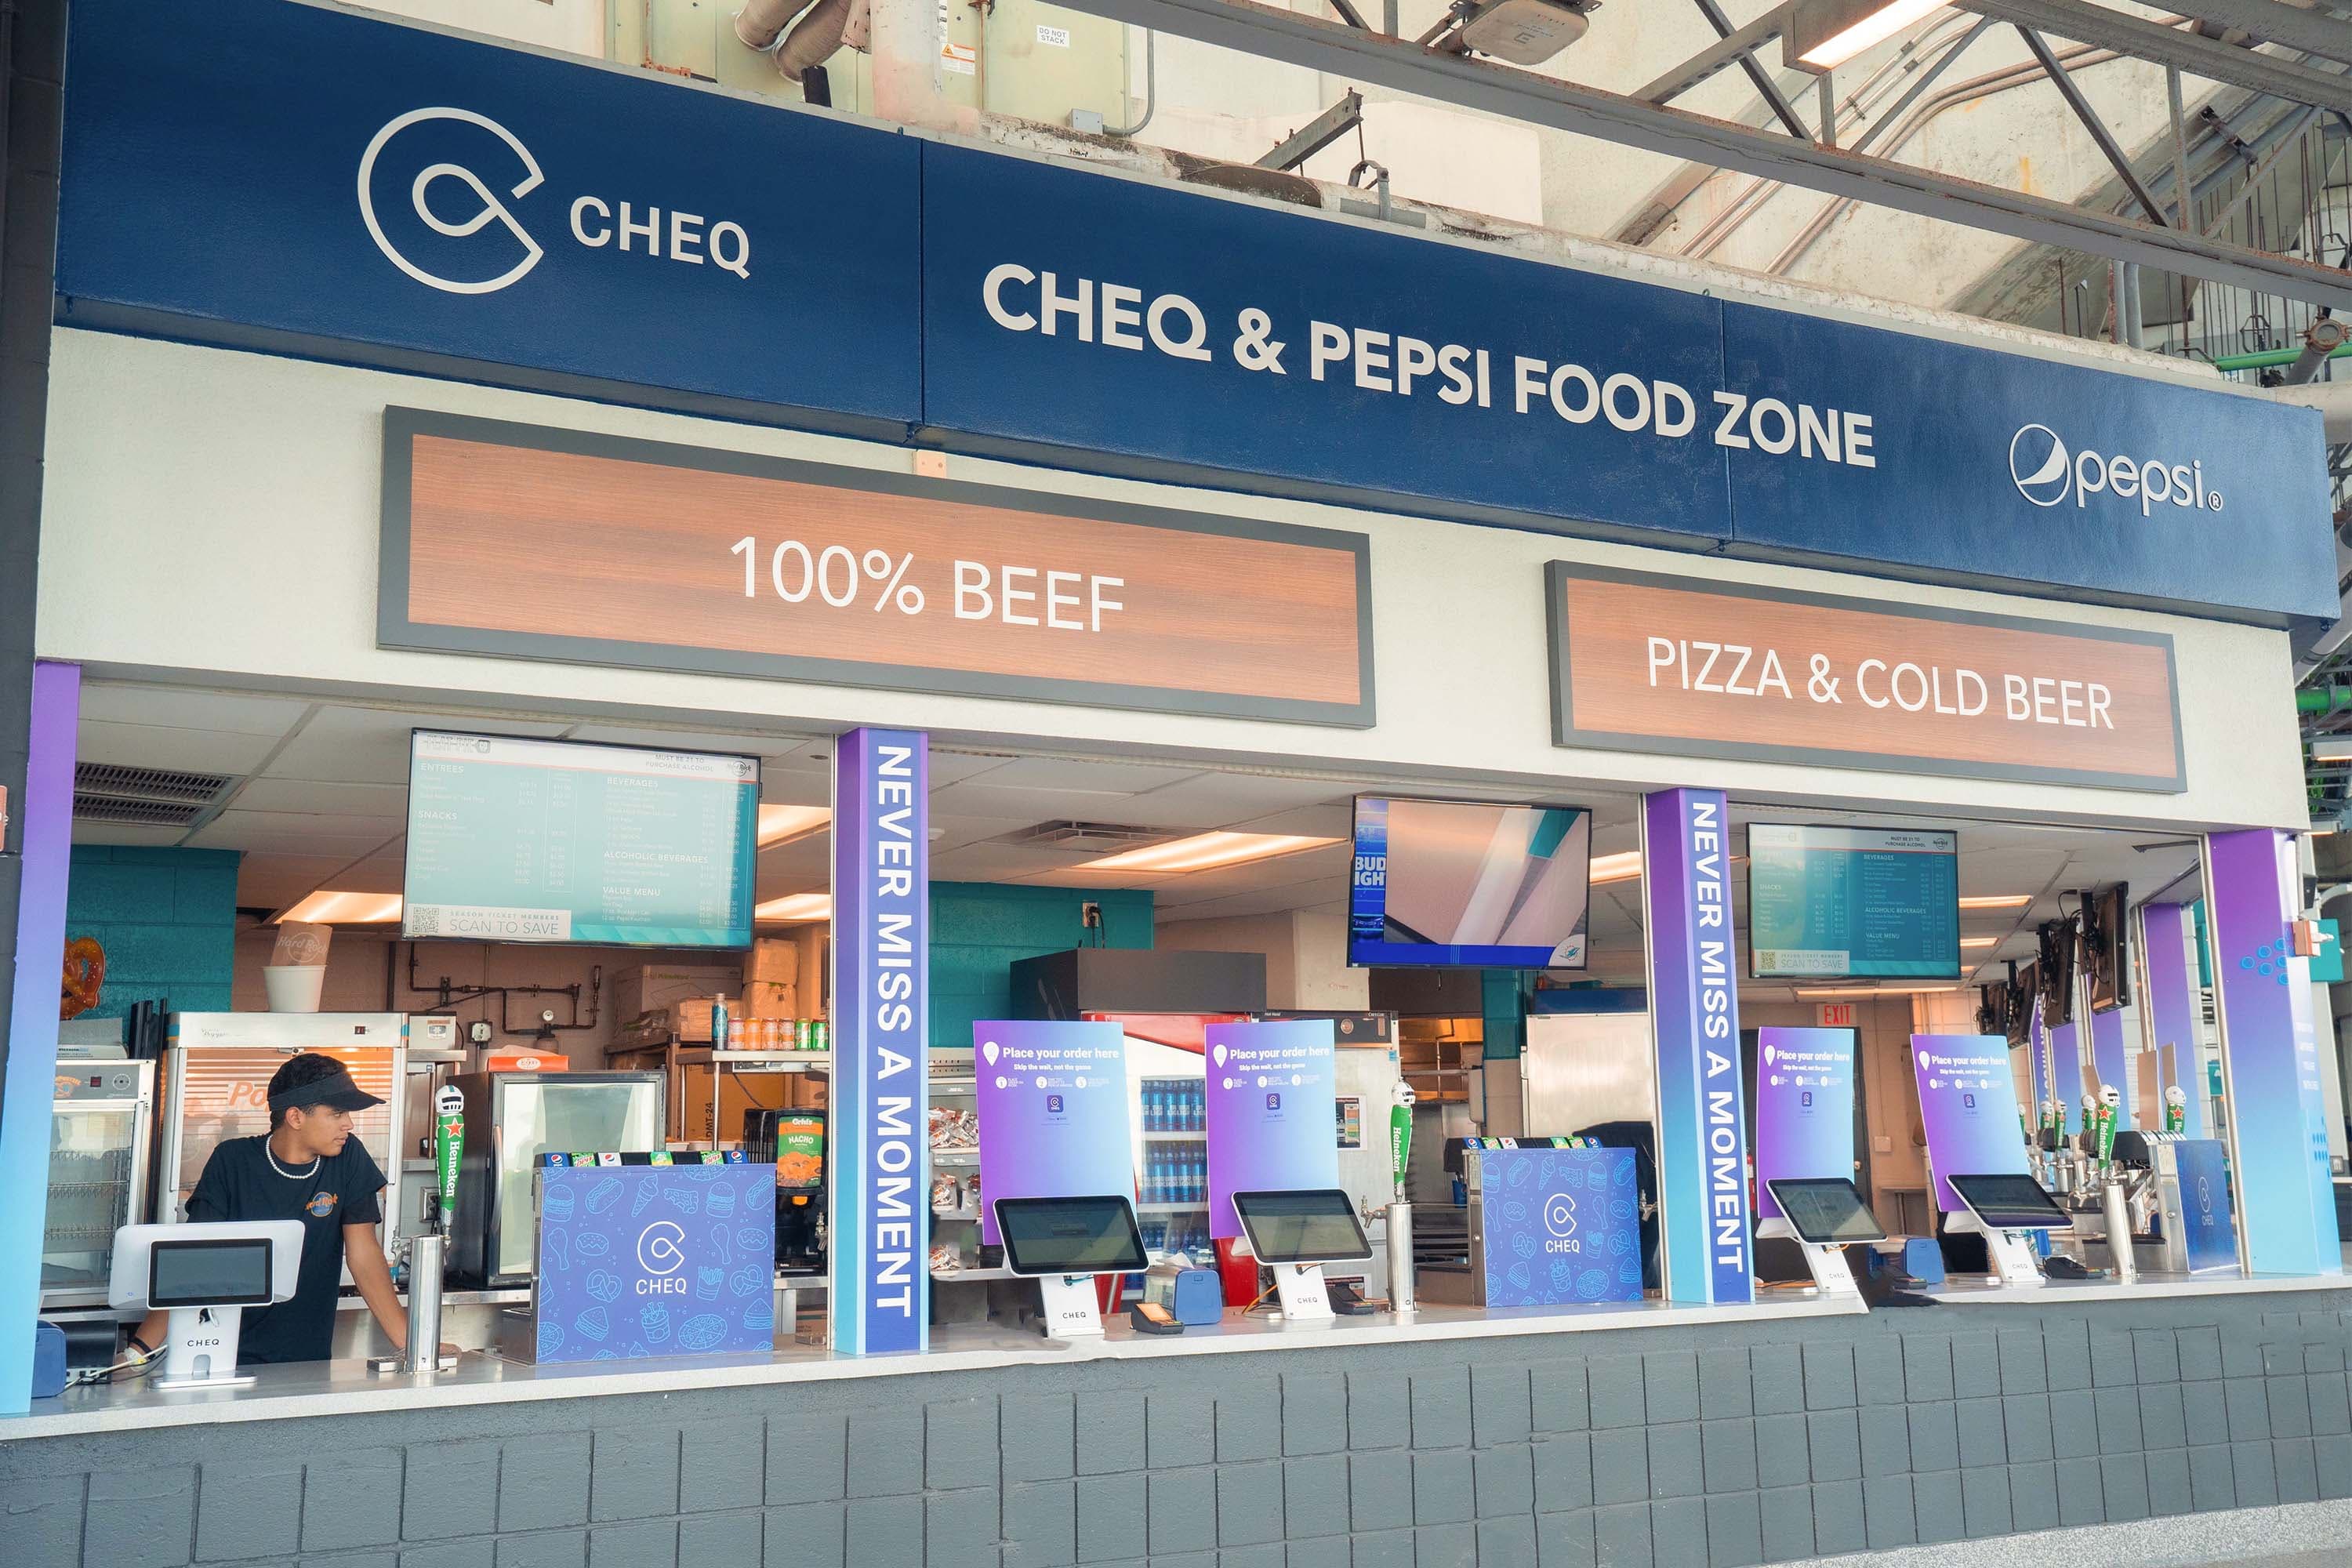 CHEQ & Pepsi Food Zone with Kiosks